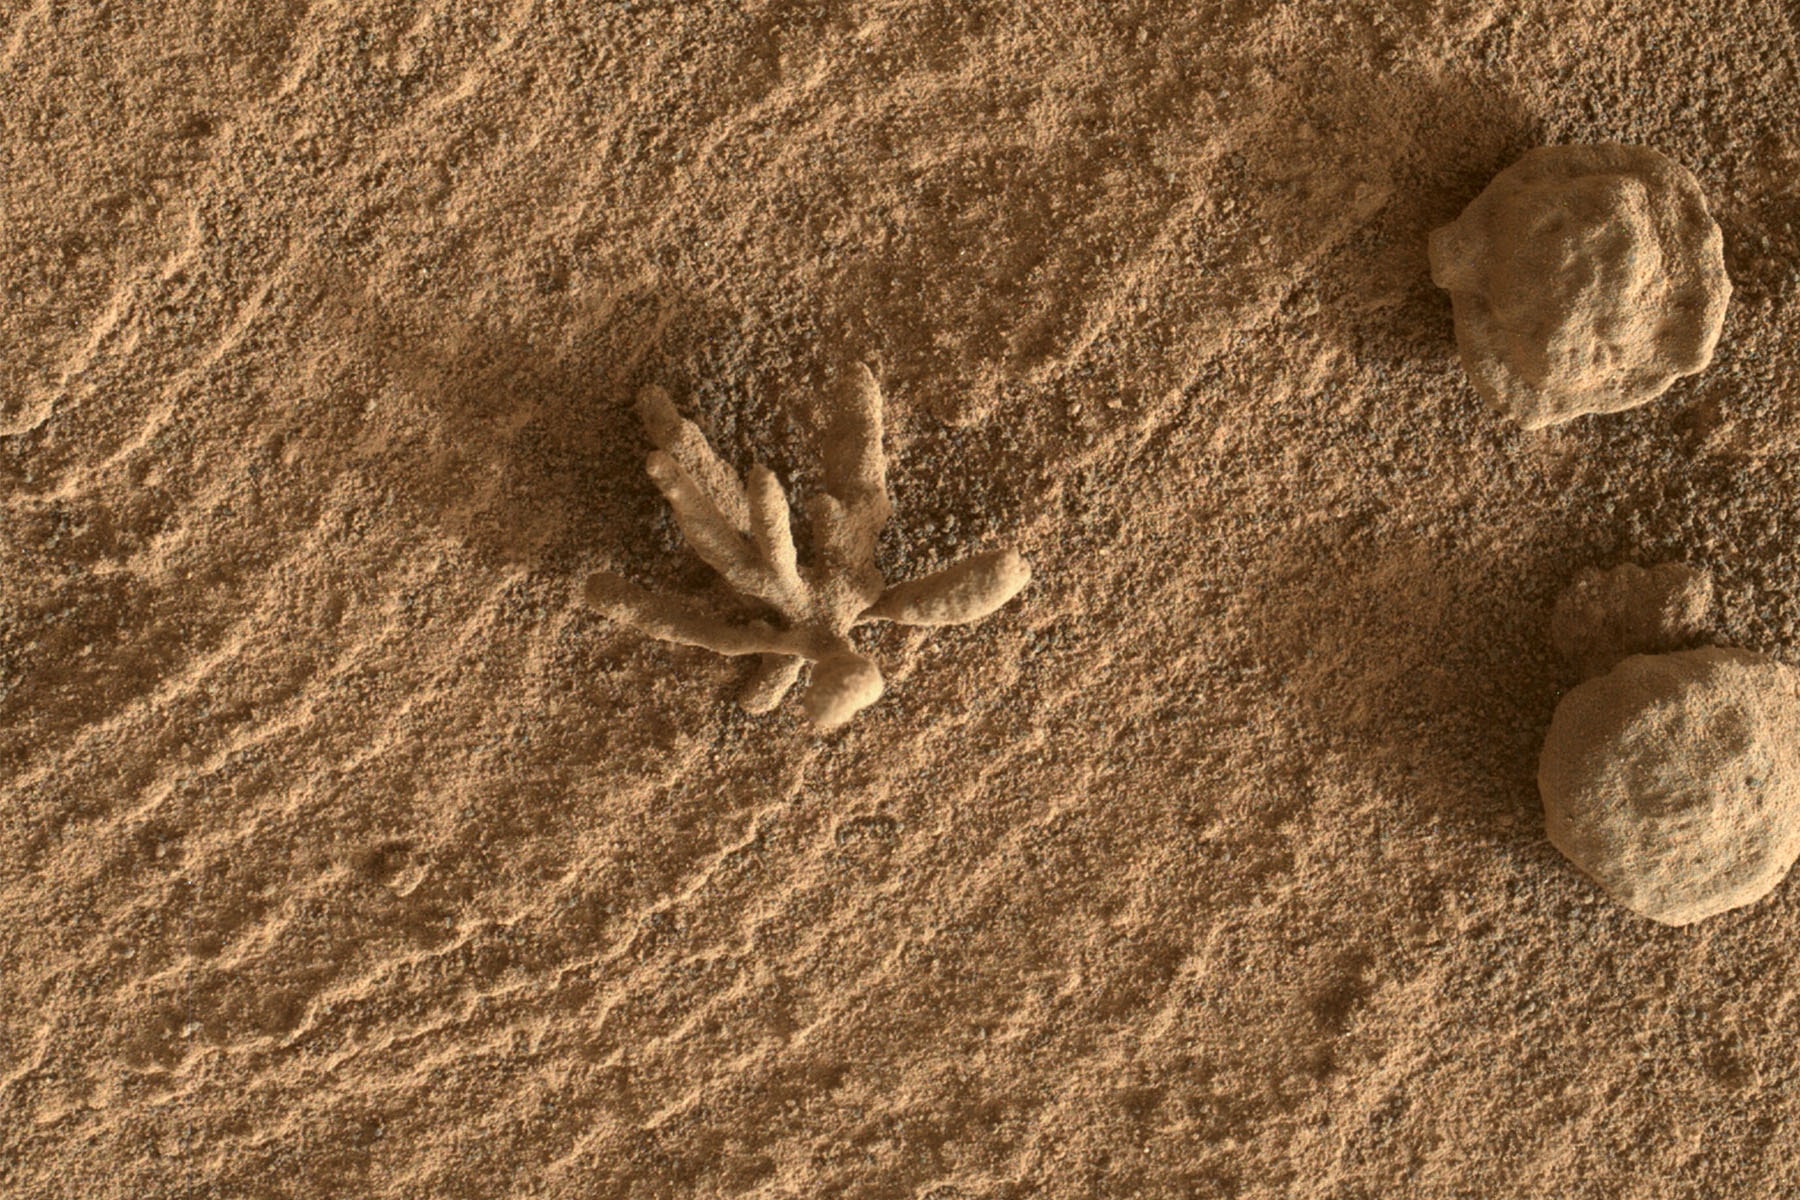 NASA「好奇號 Curiosity」探測車在火星發現分枝珊瑚狀結構